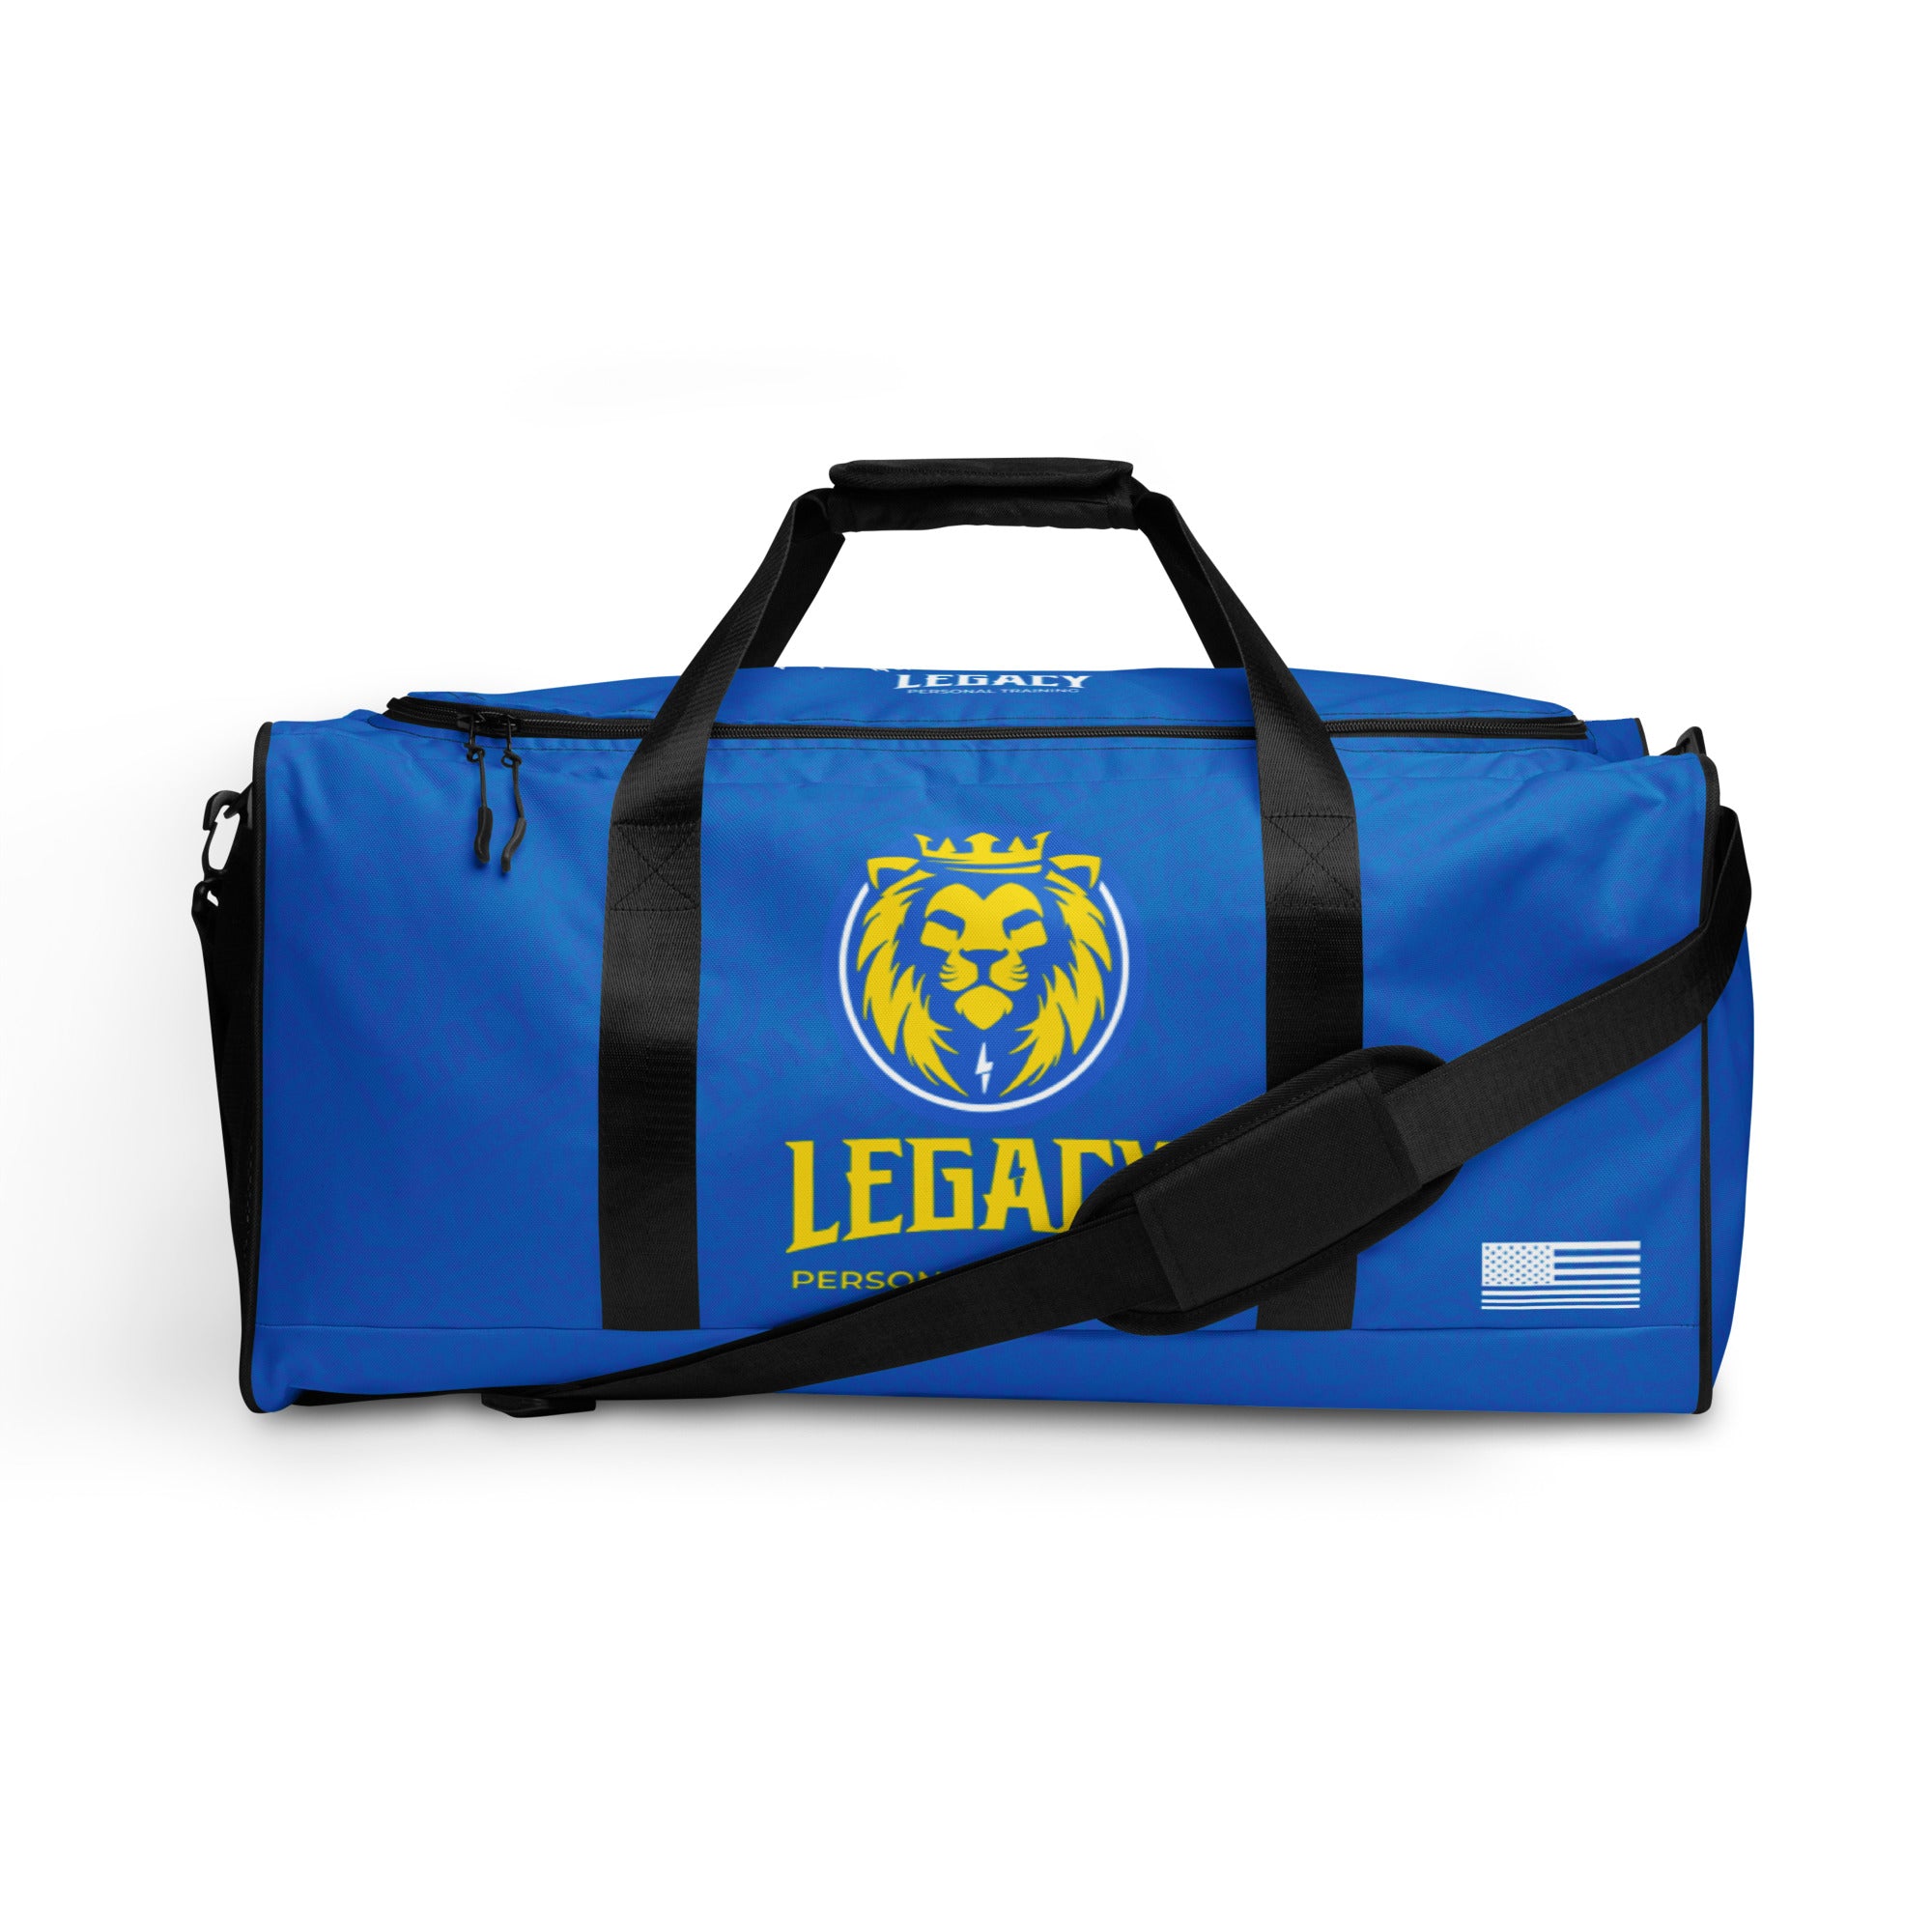 Legacy Duffle bag